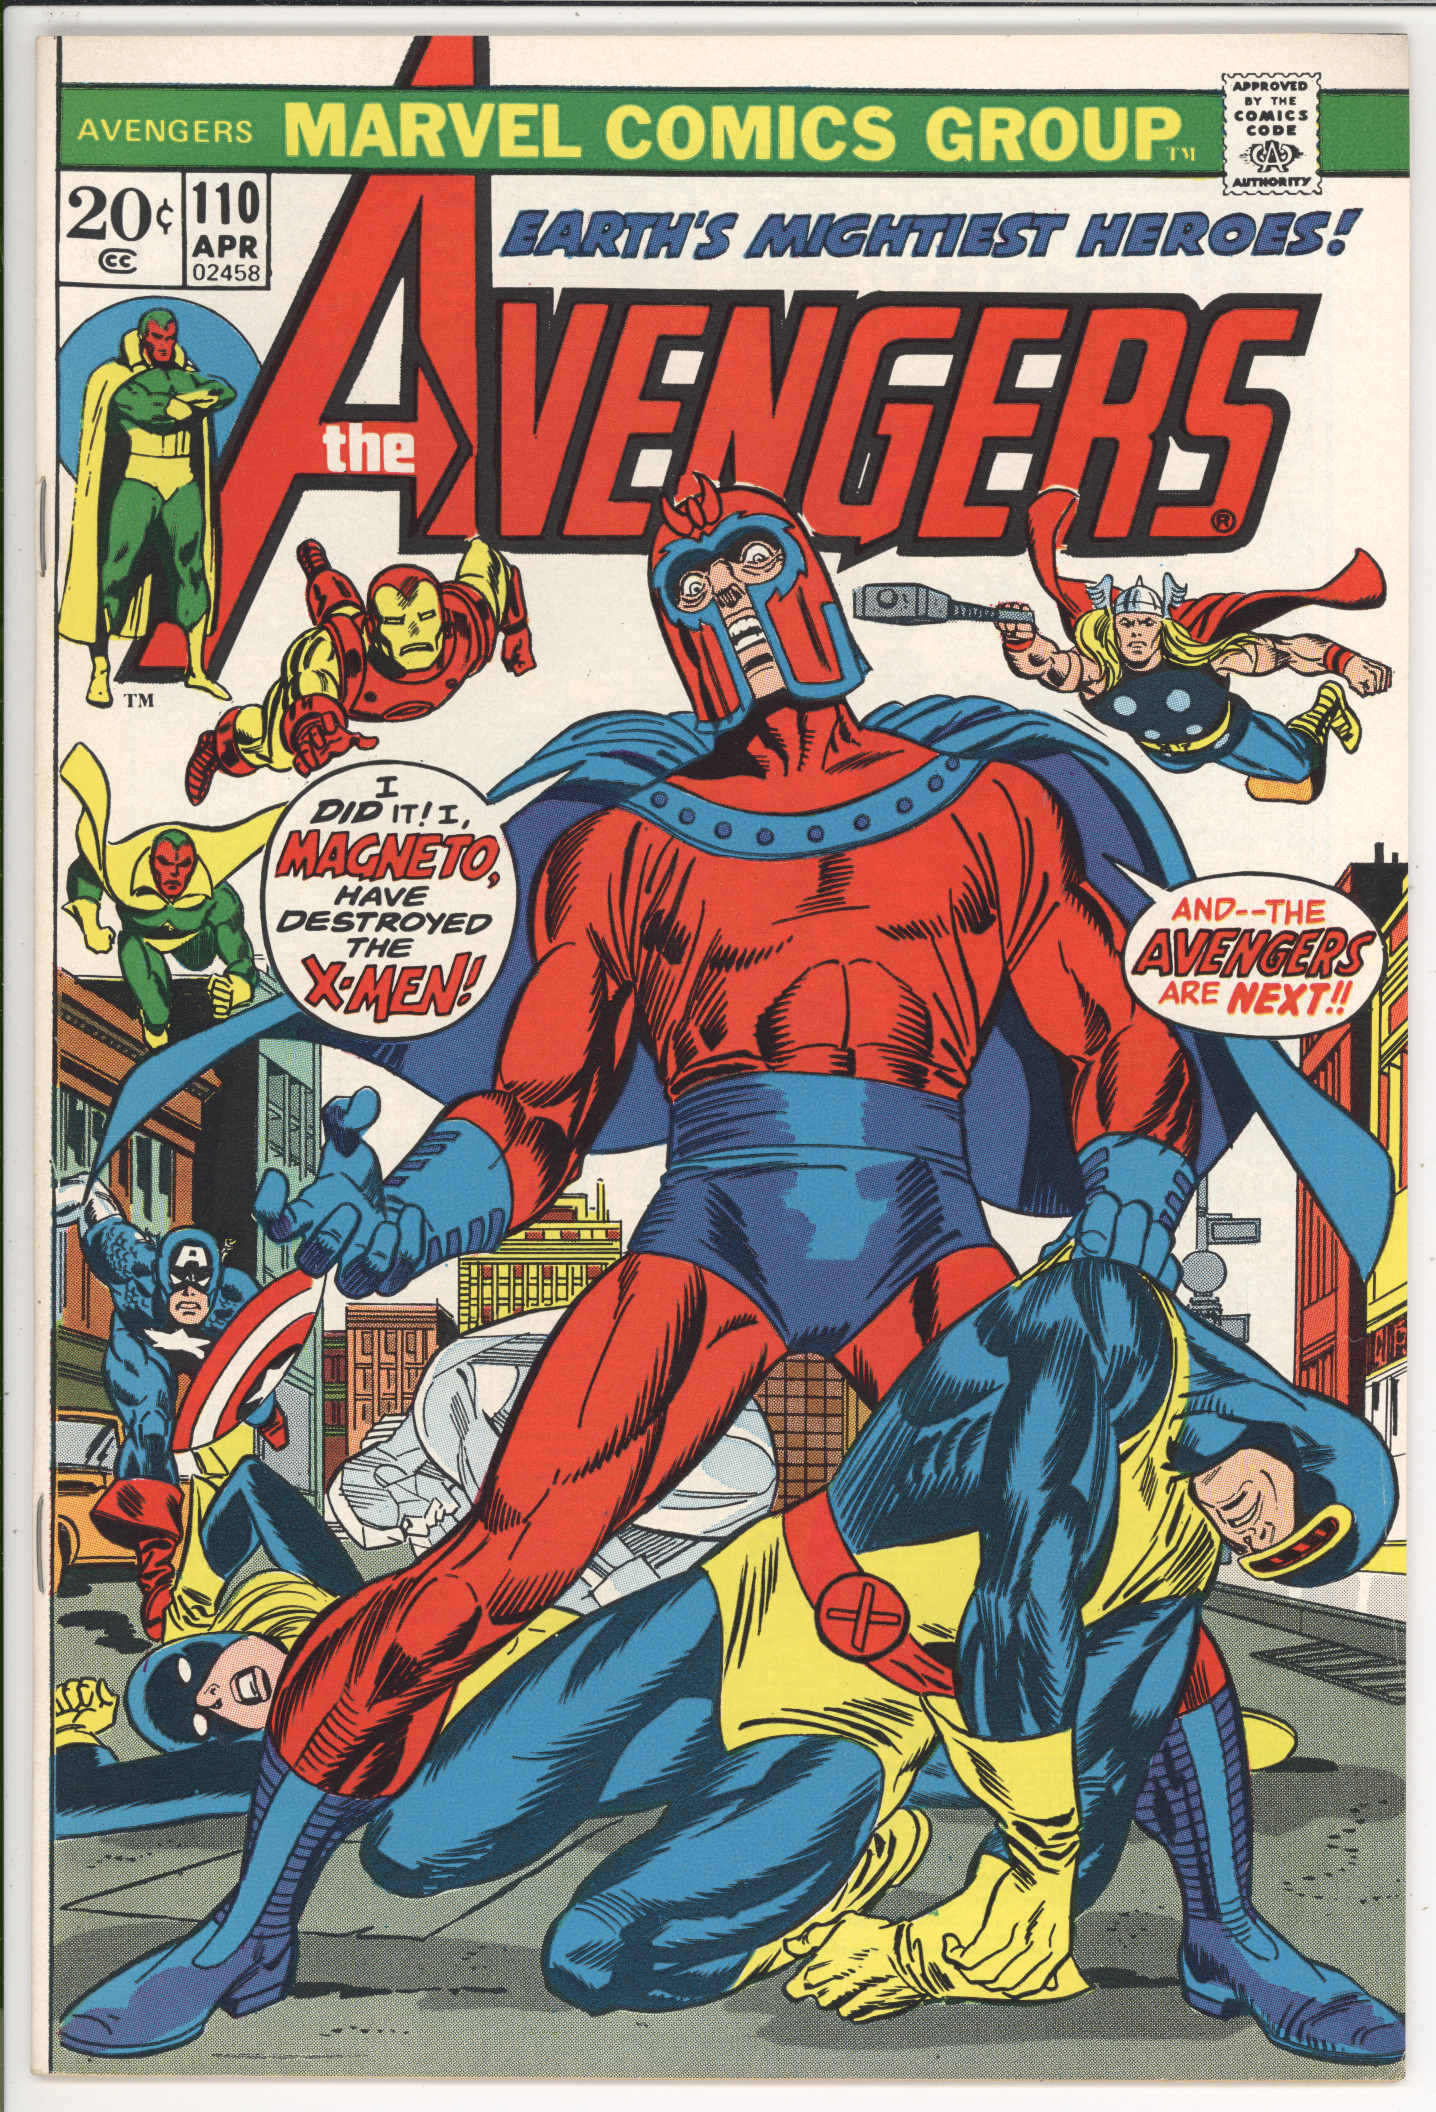 Avengers #110 front